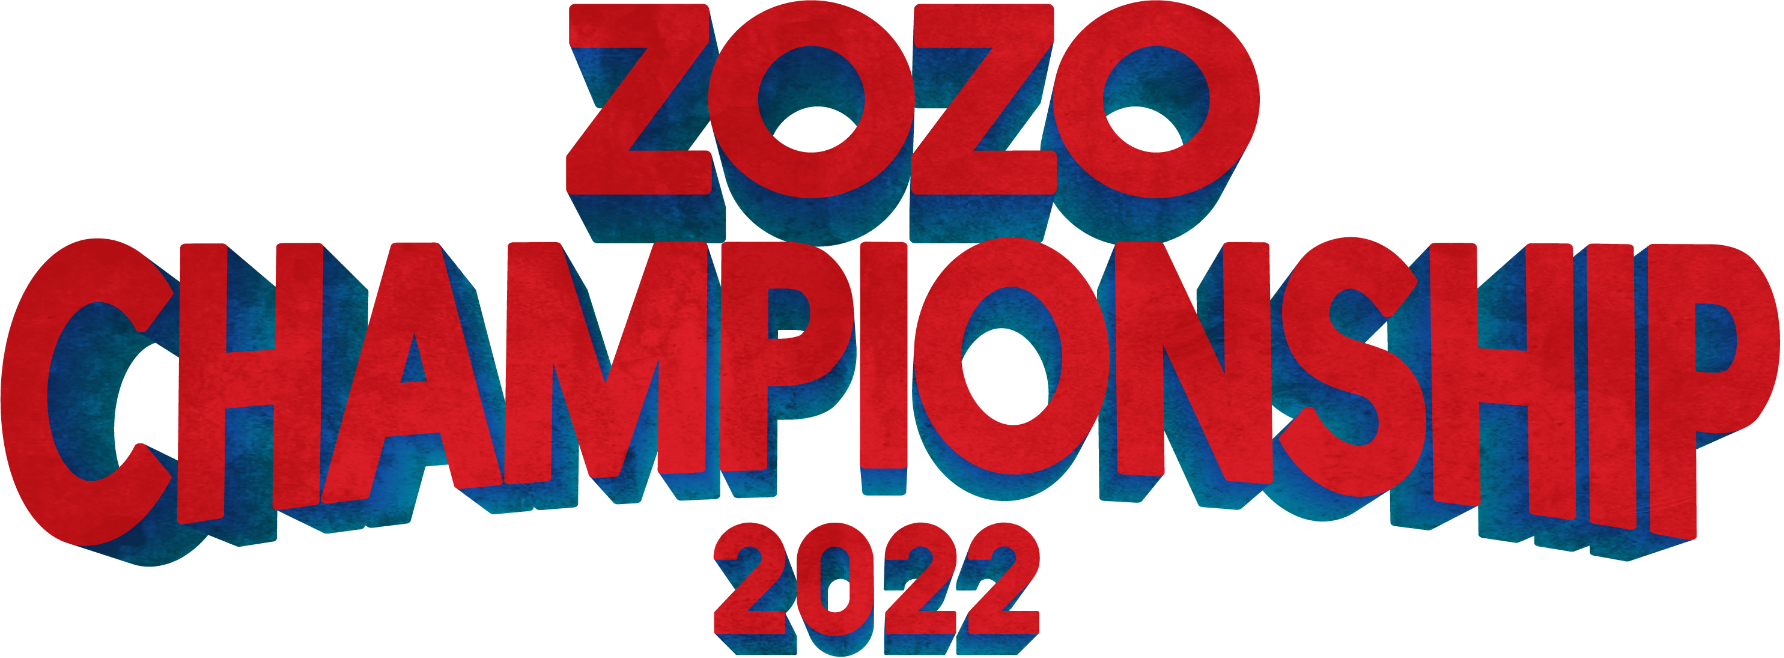 ZOZO CHAMPIONSHIP - 世界最高峰のPGA TOURトーナメント